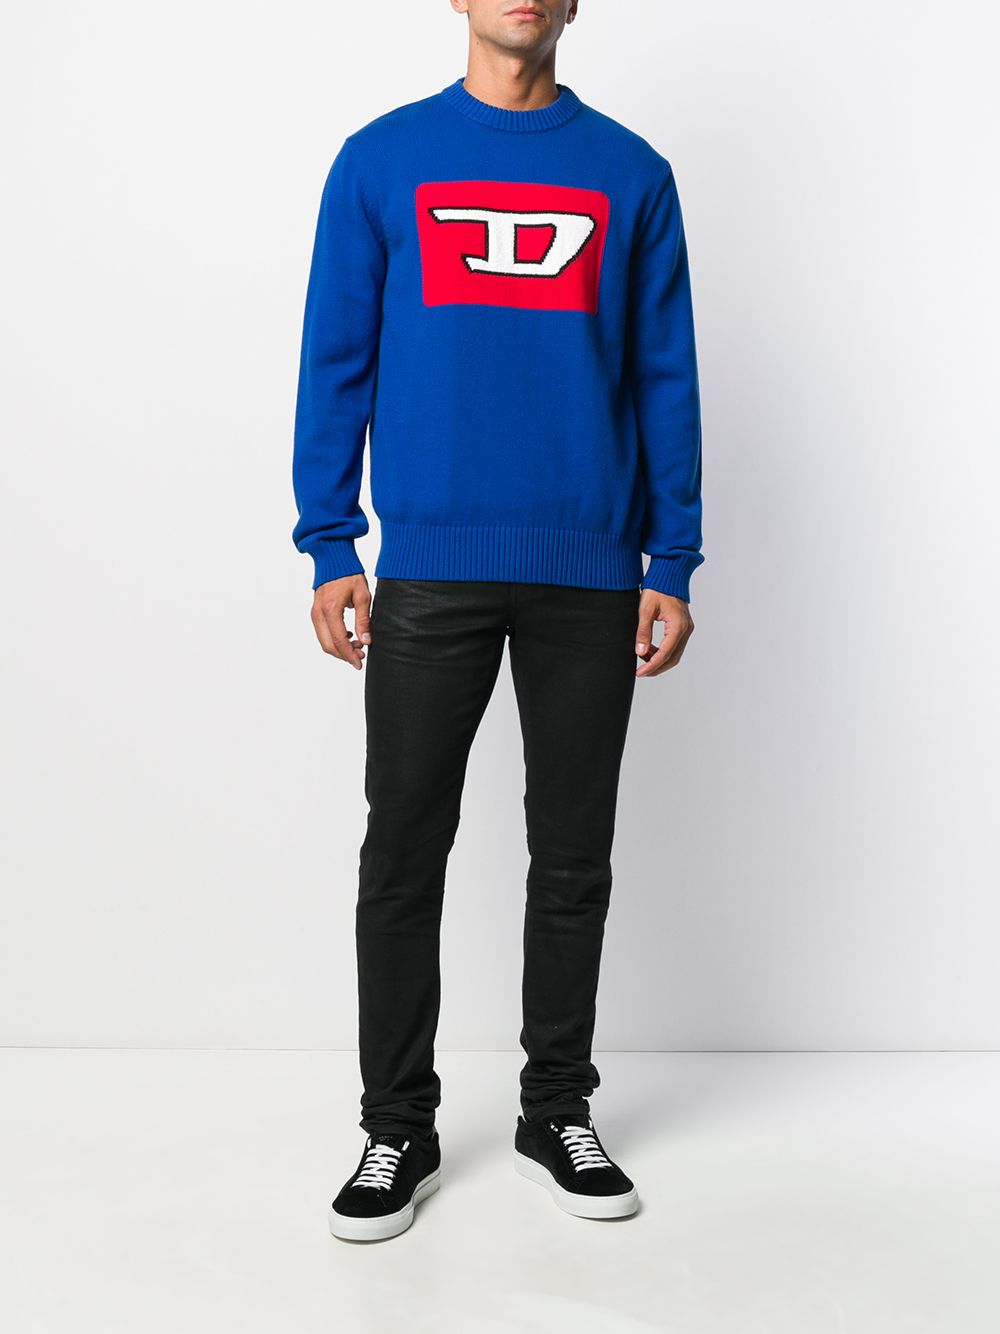 фото Diesel свитер вязки интарсия с логотипом